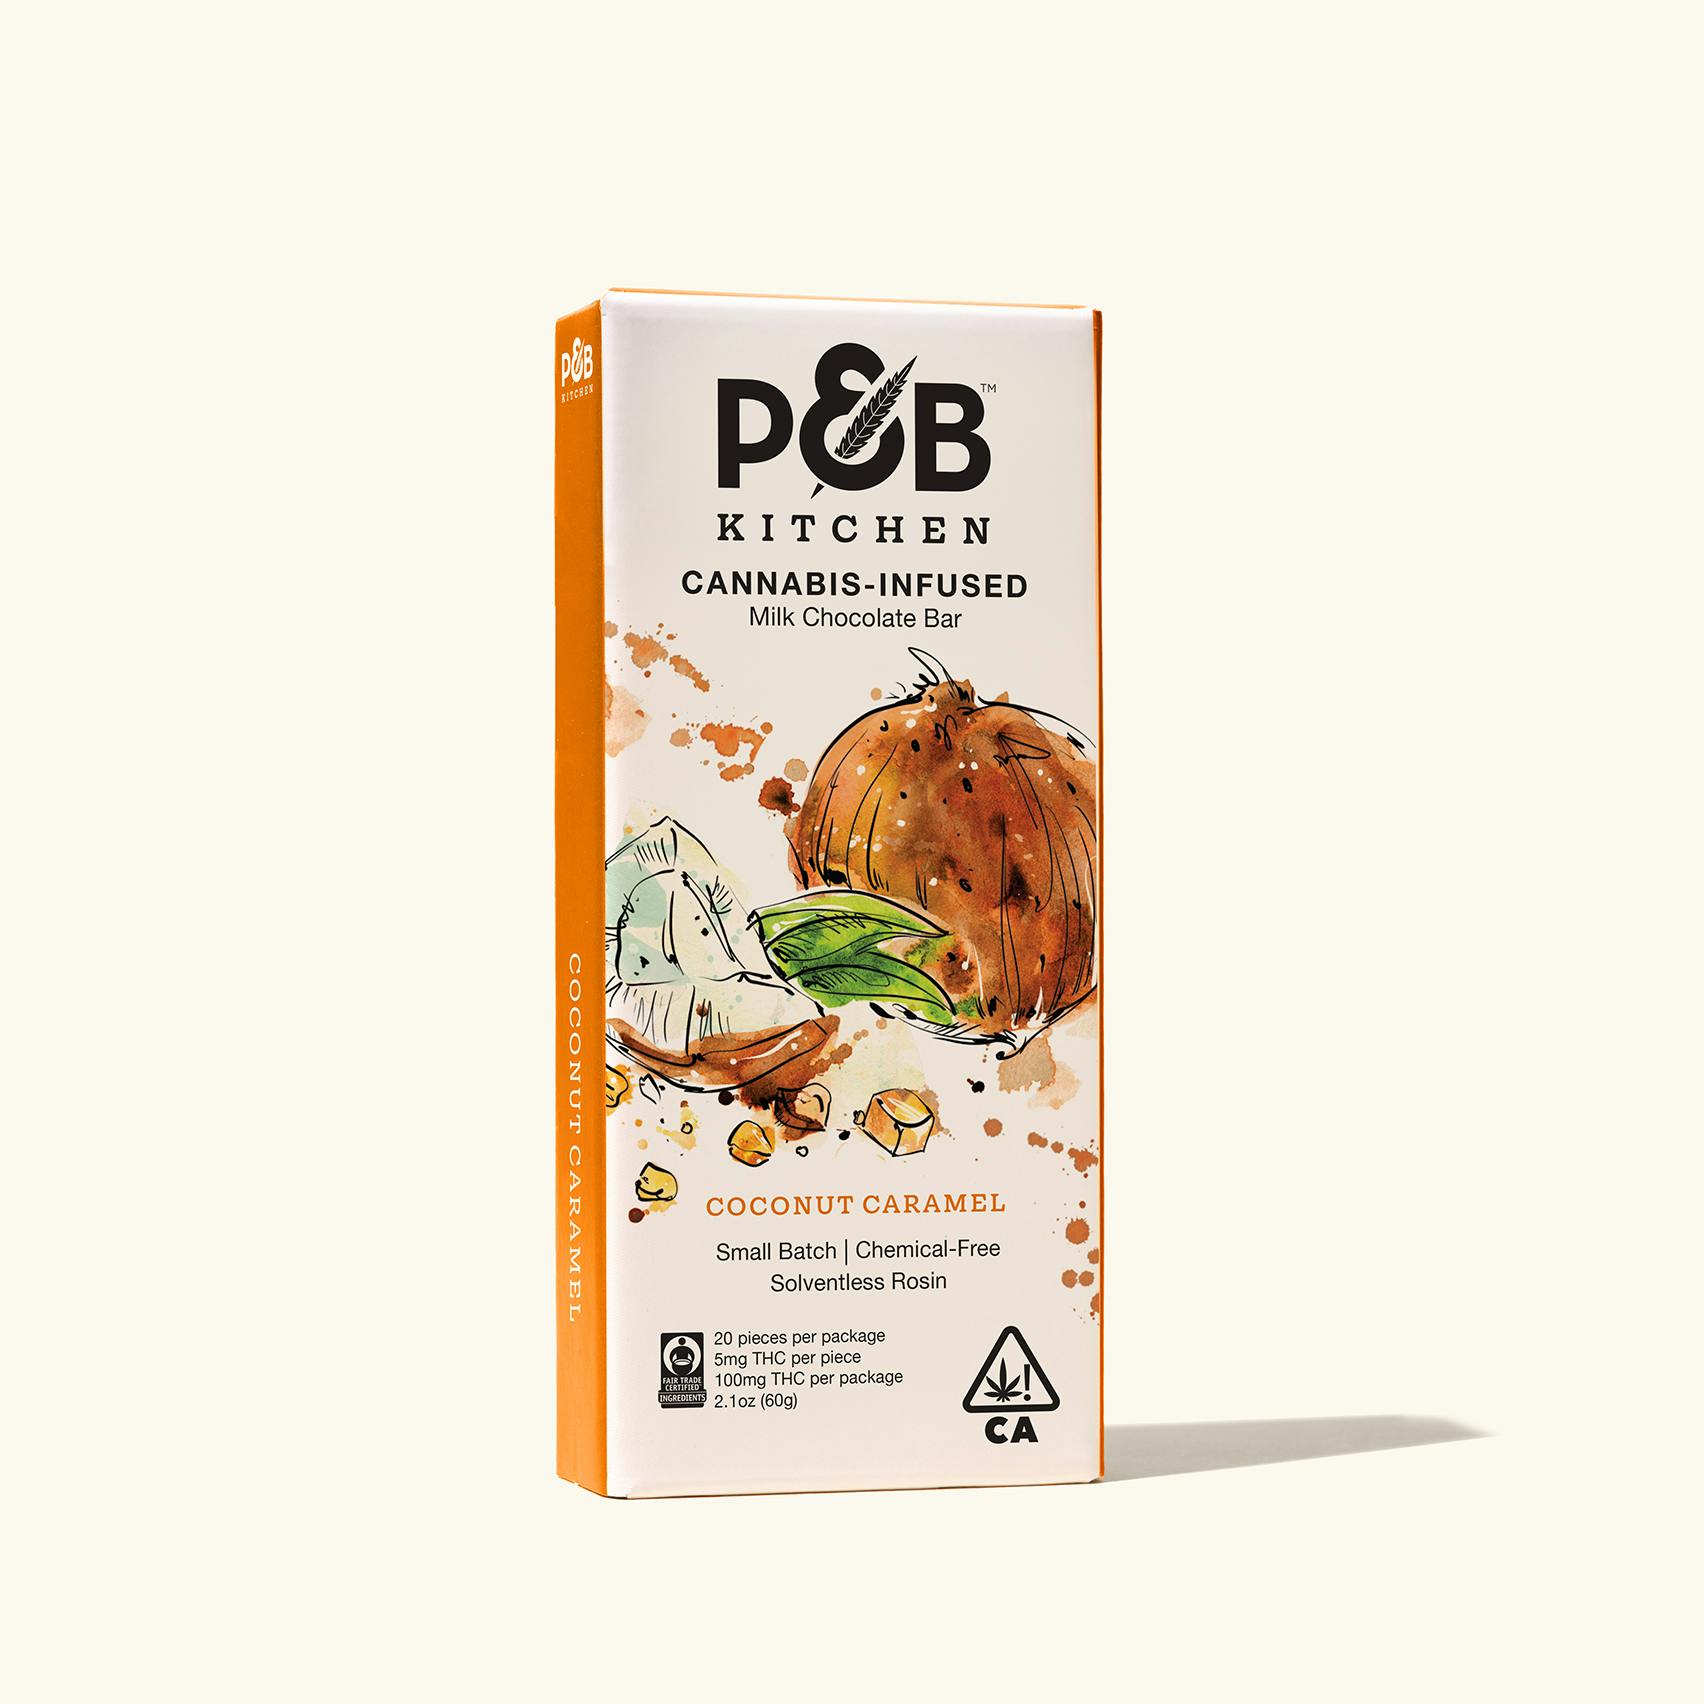 PB Kitchen Coconut Caramel Chocolate Bar Box Product Image PDP Main Gallery Cream 01